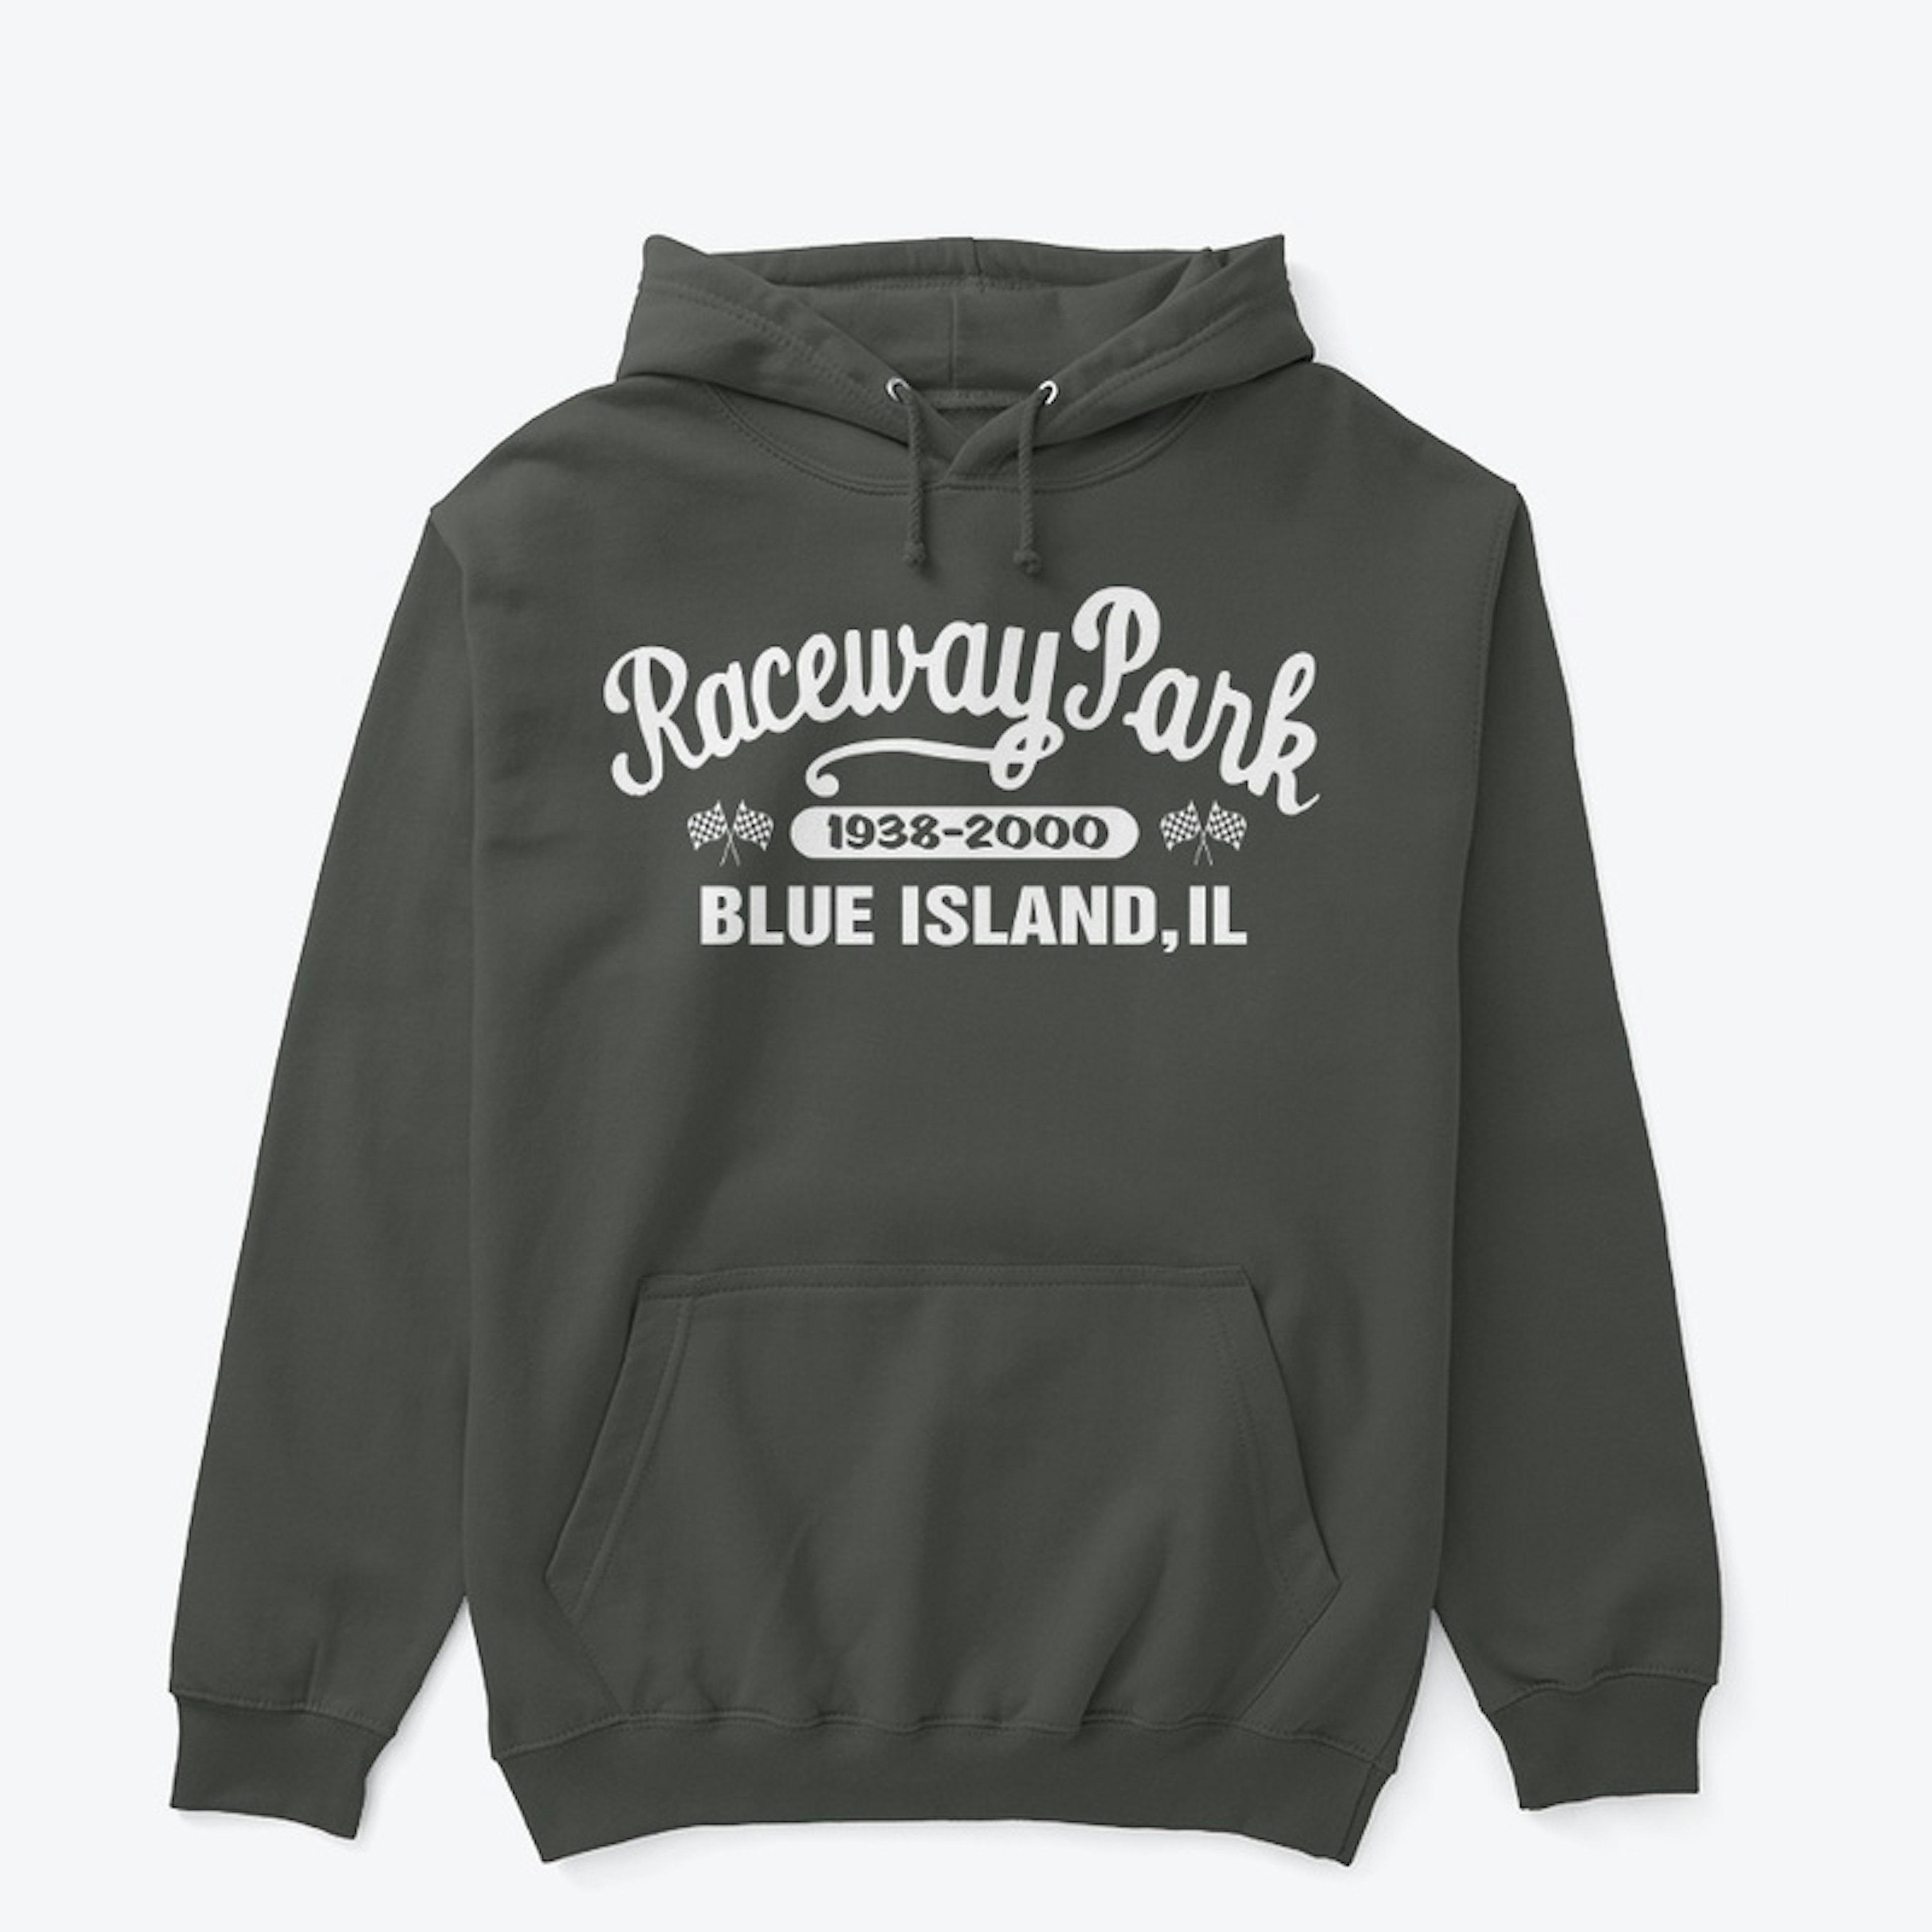 RACEWAY PARK / Blue Island, IL.1